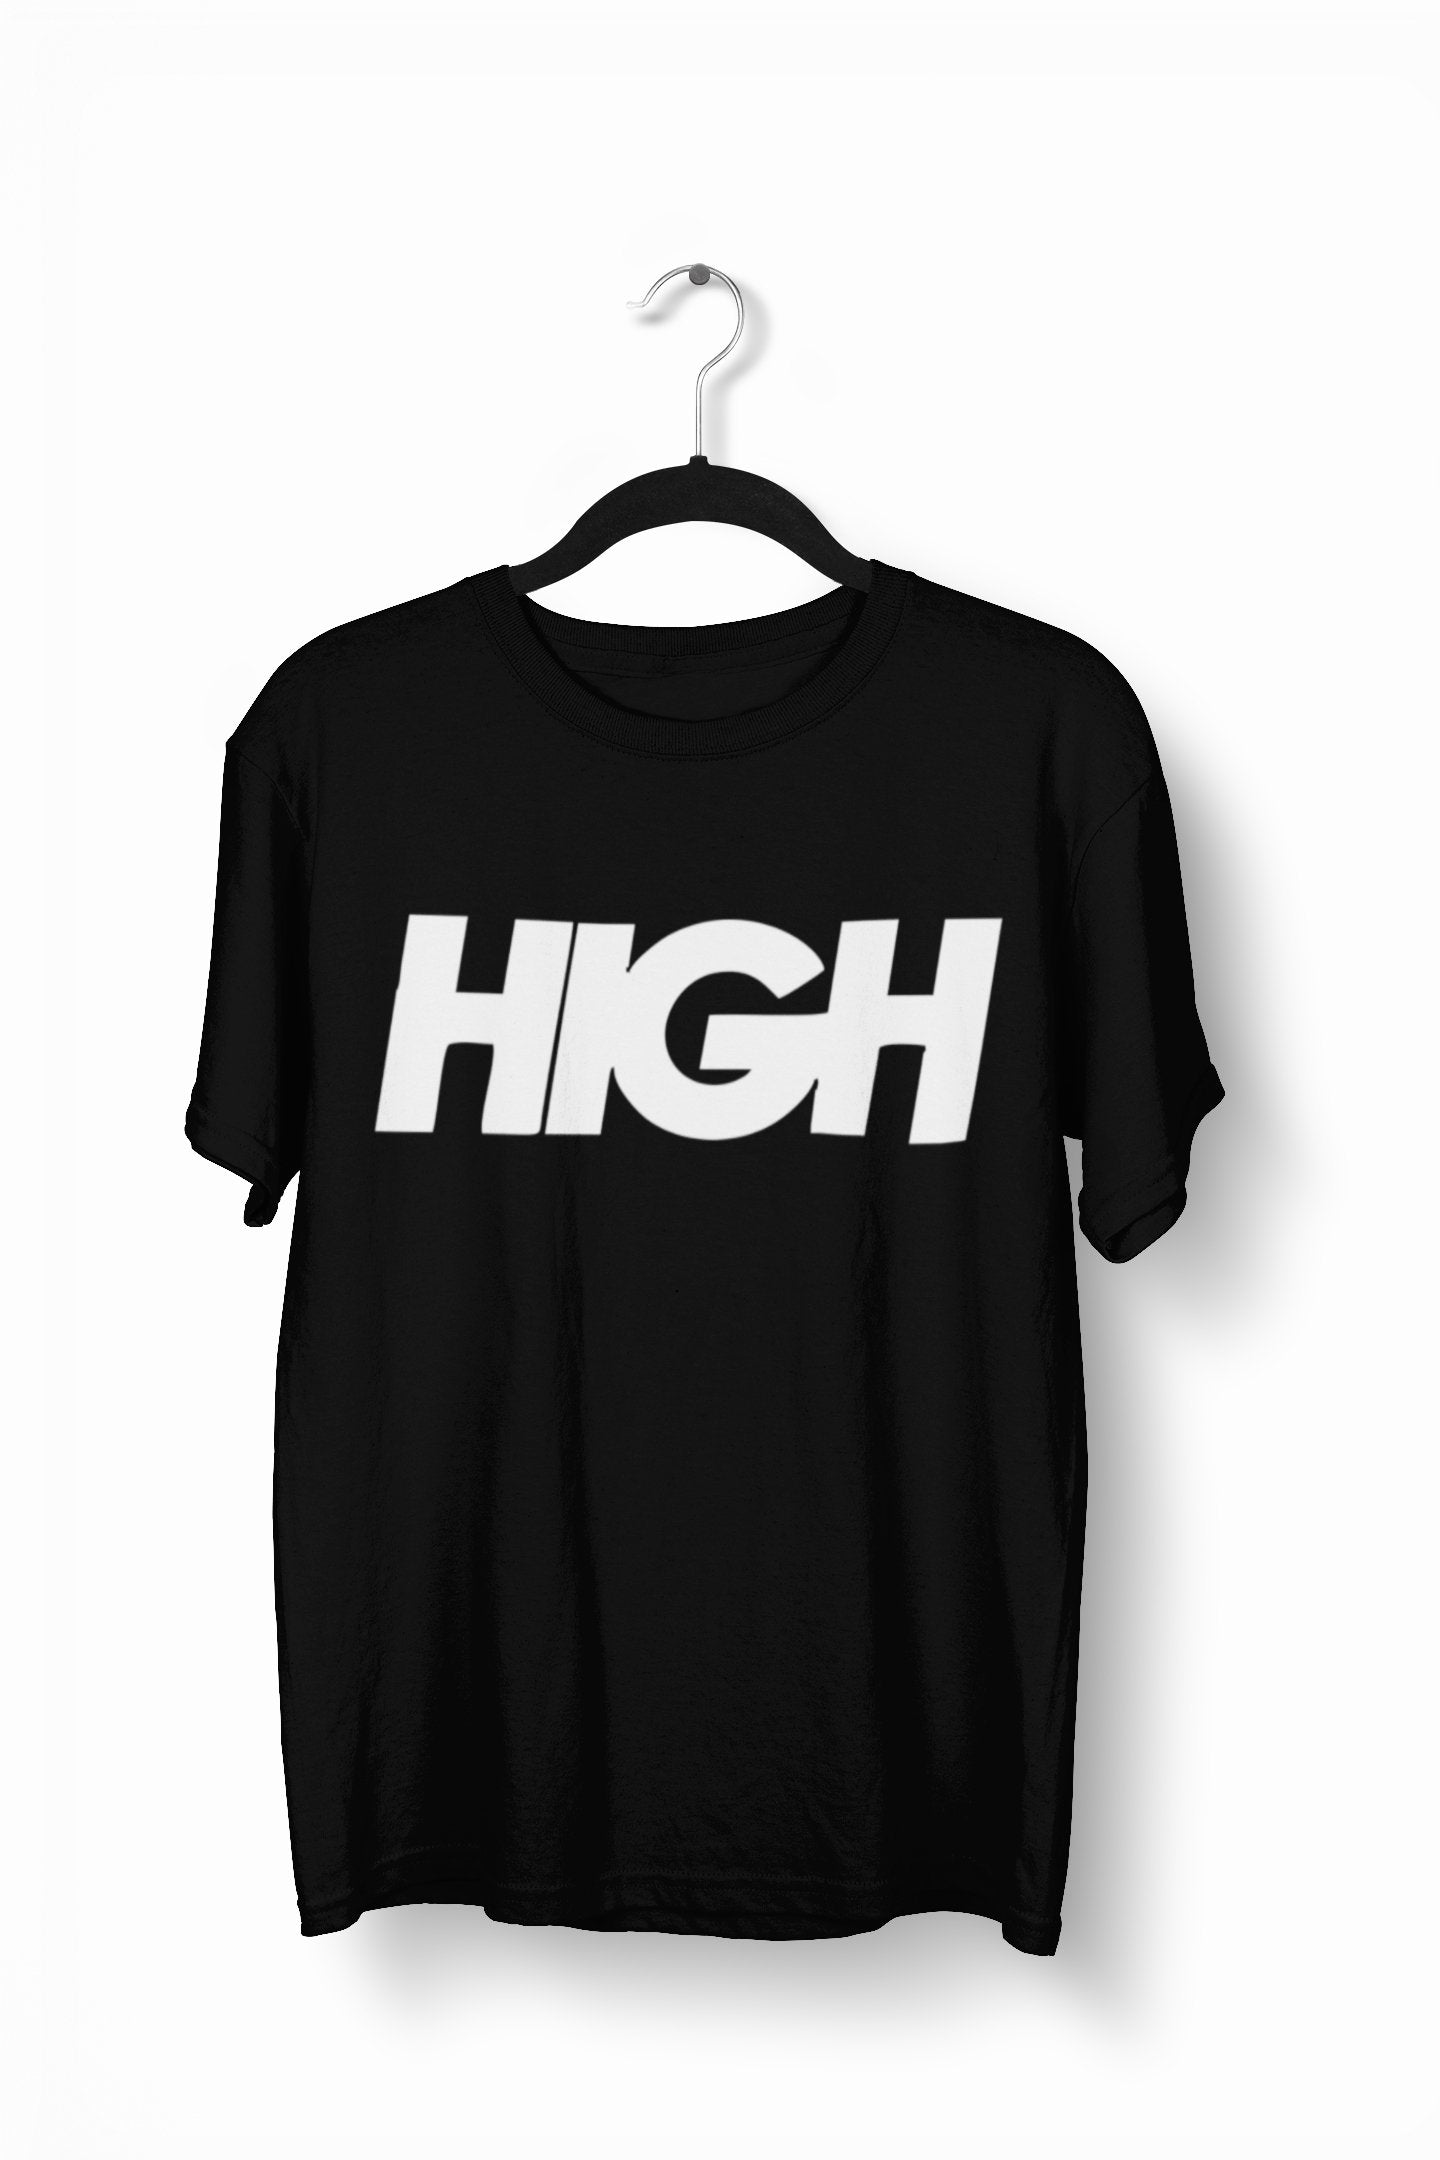 thelegalgang,High Stoner T shirt,MEN.